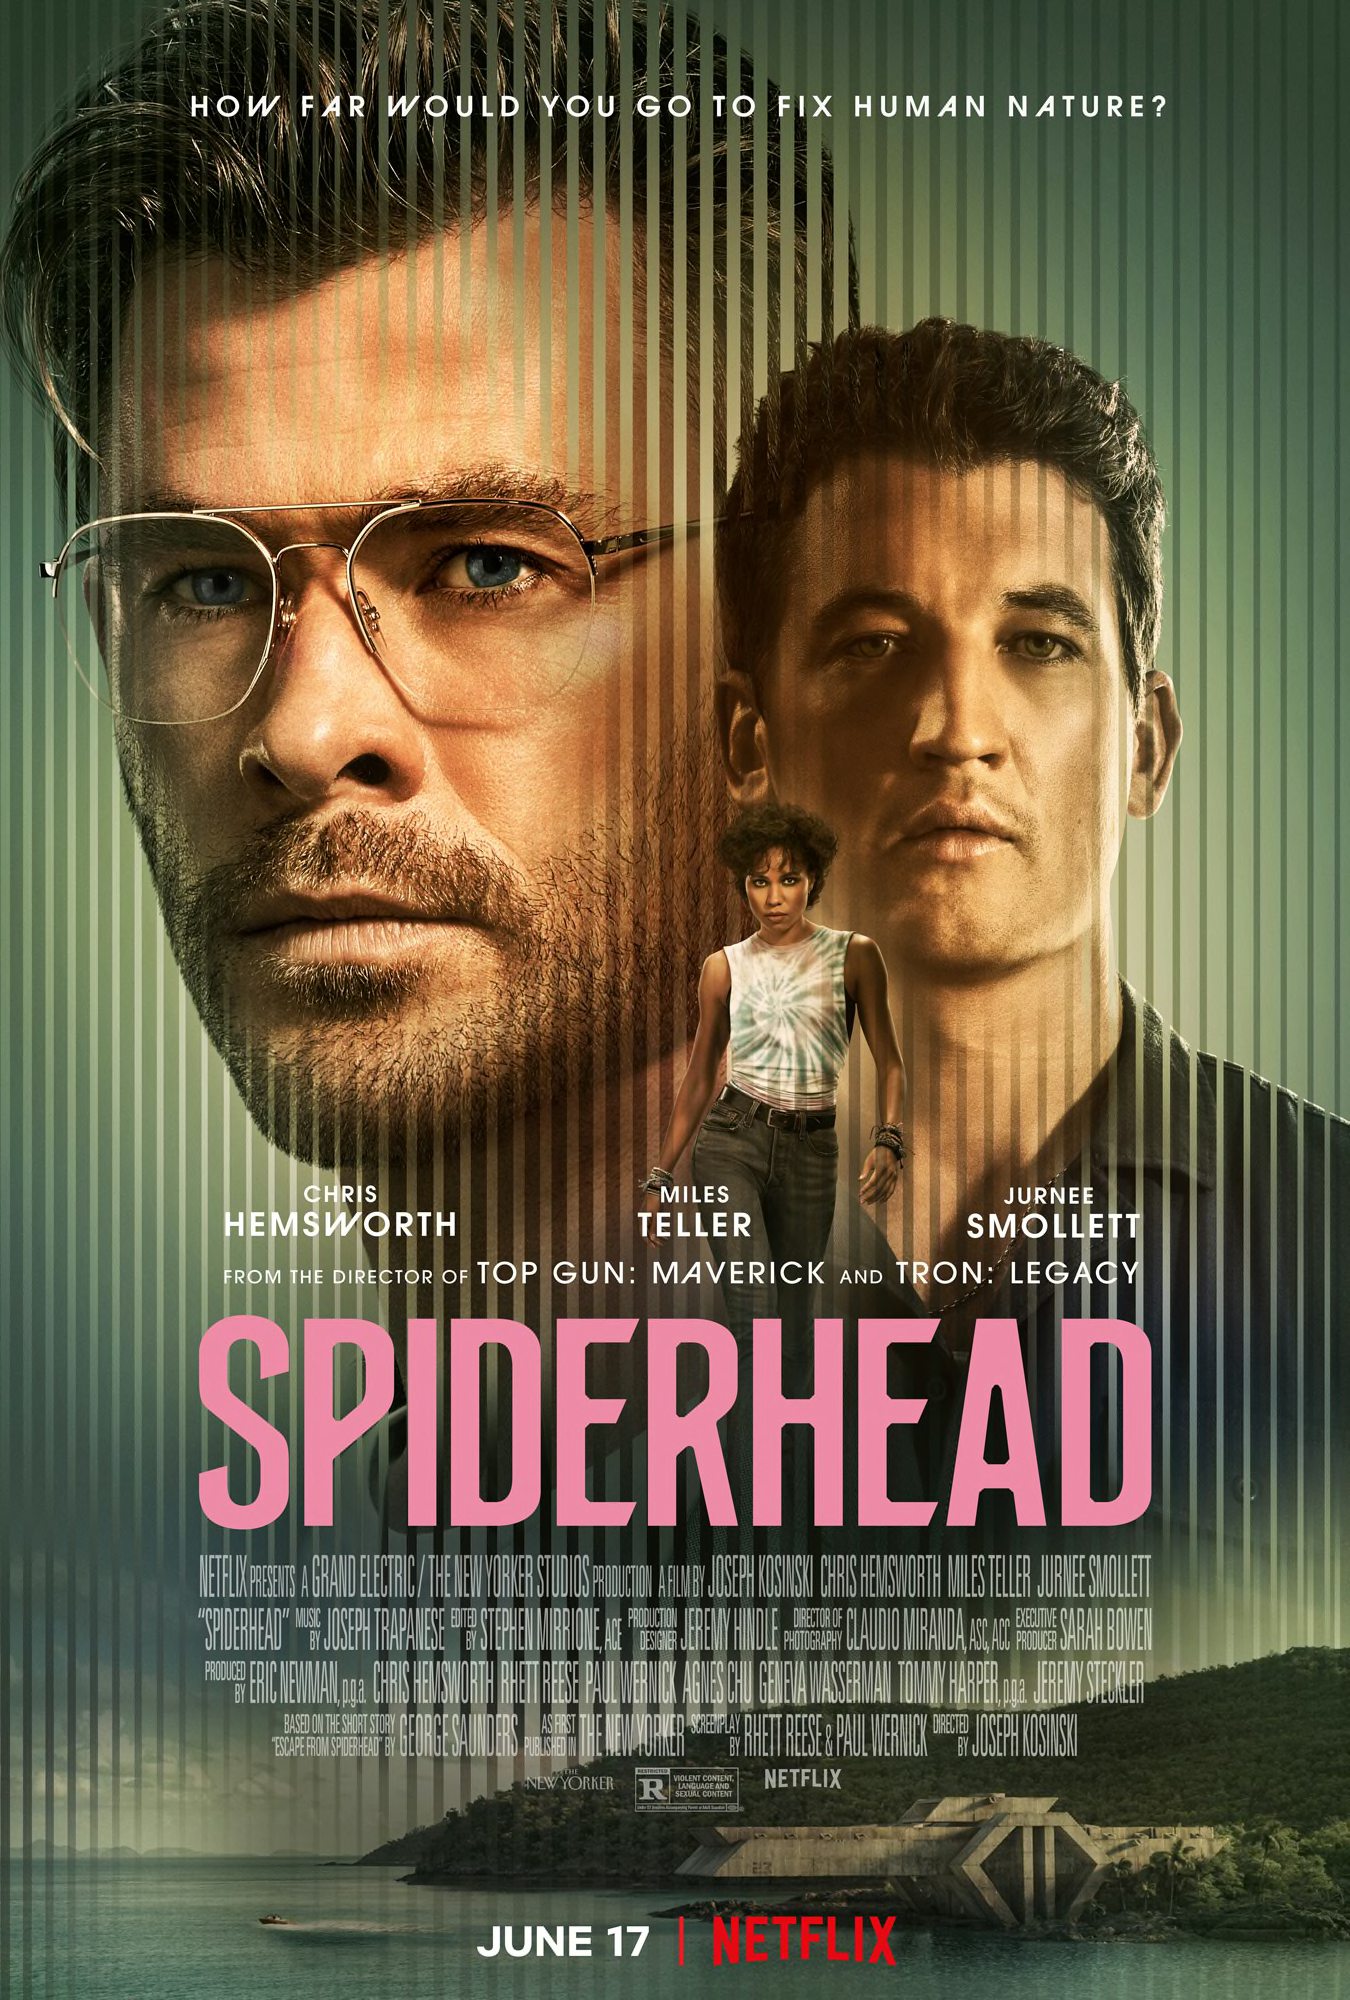 spiderhead movie review reddit